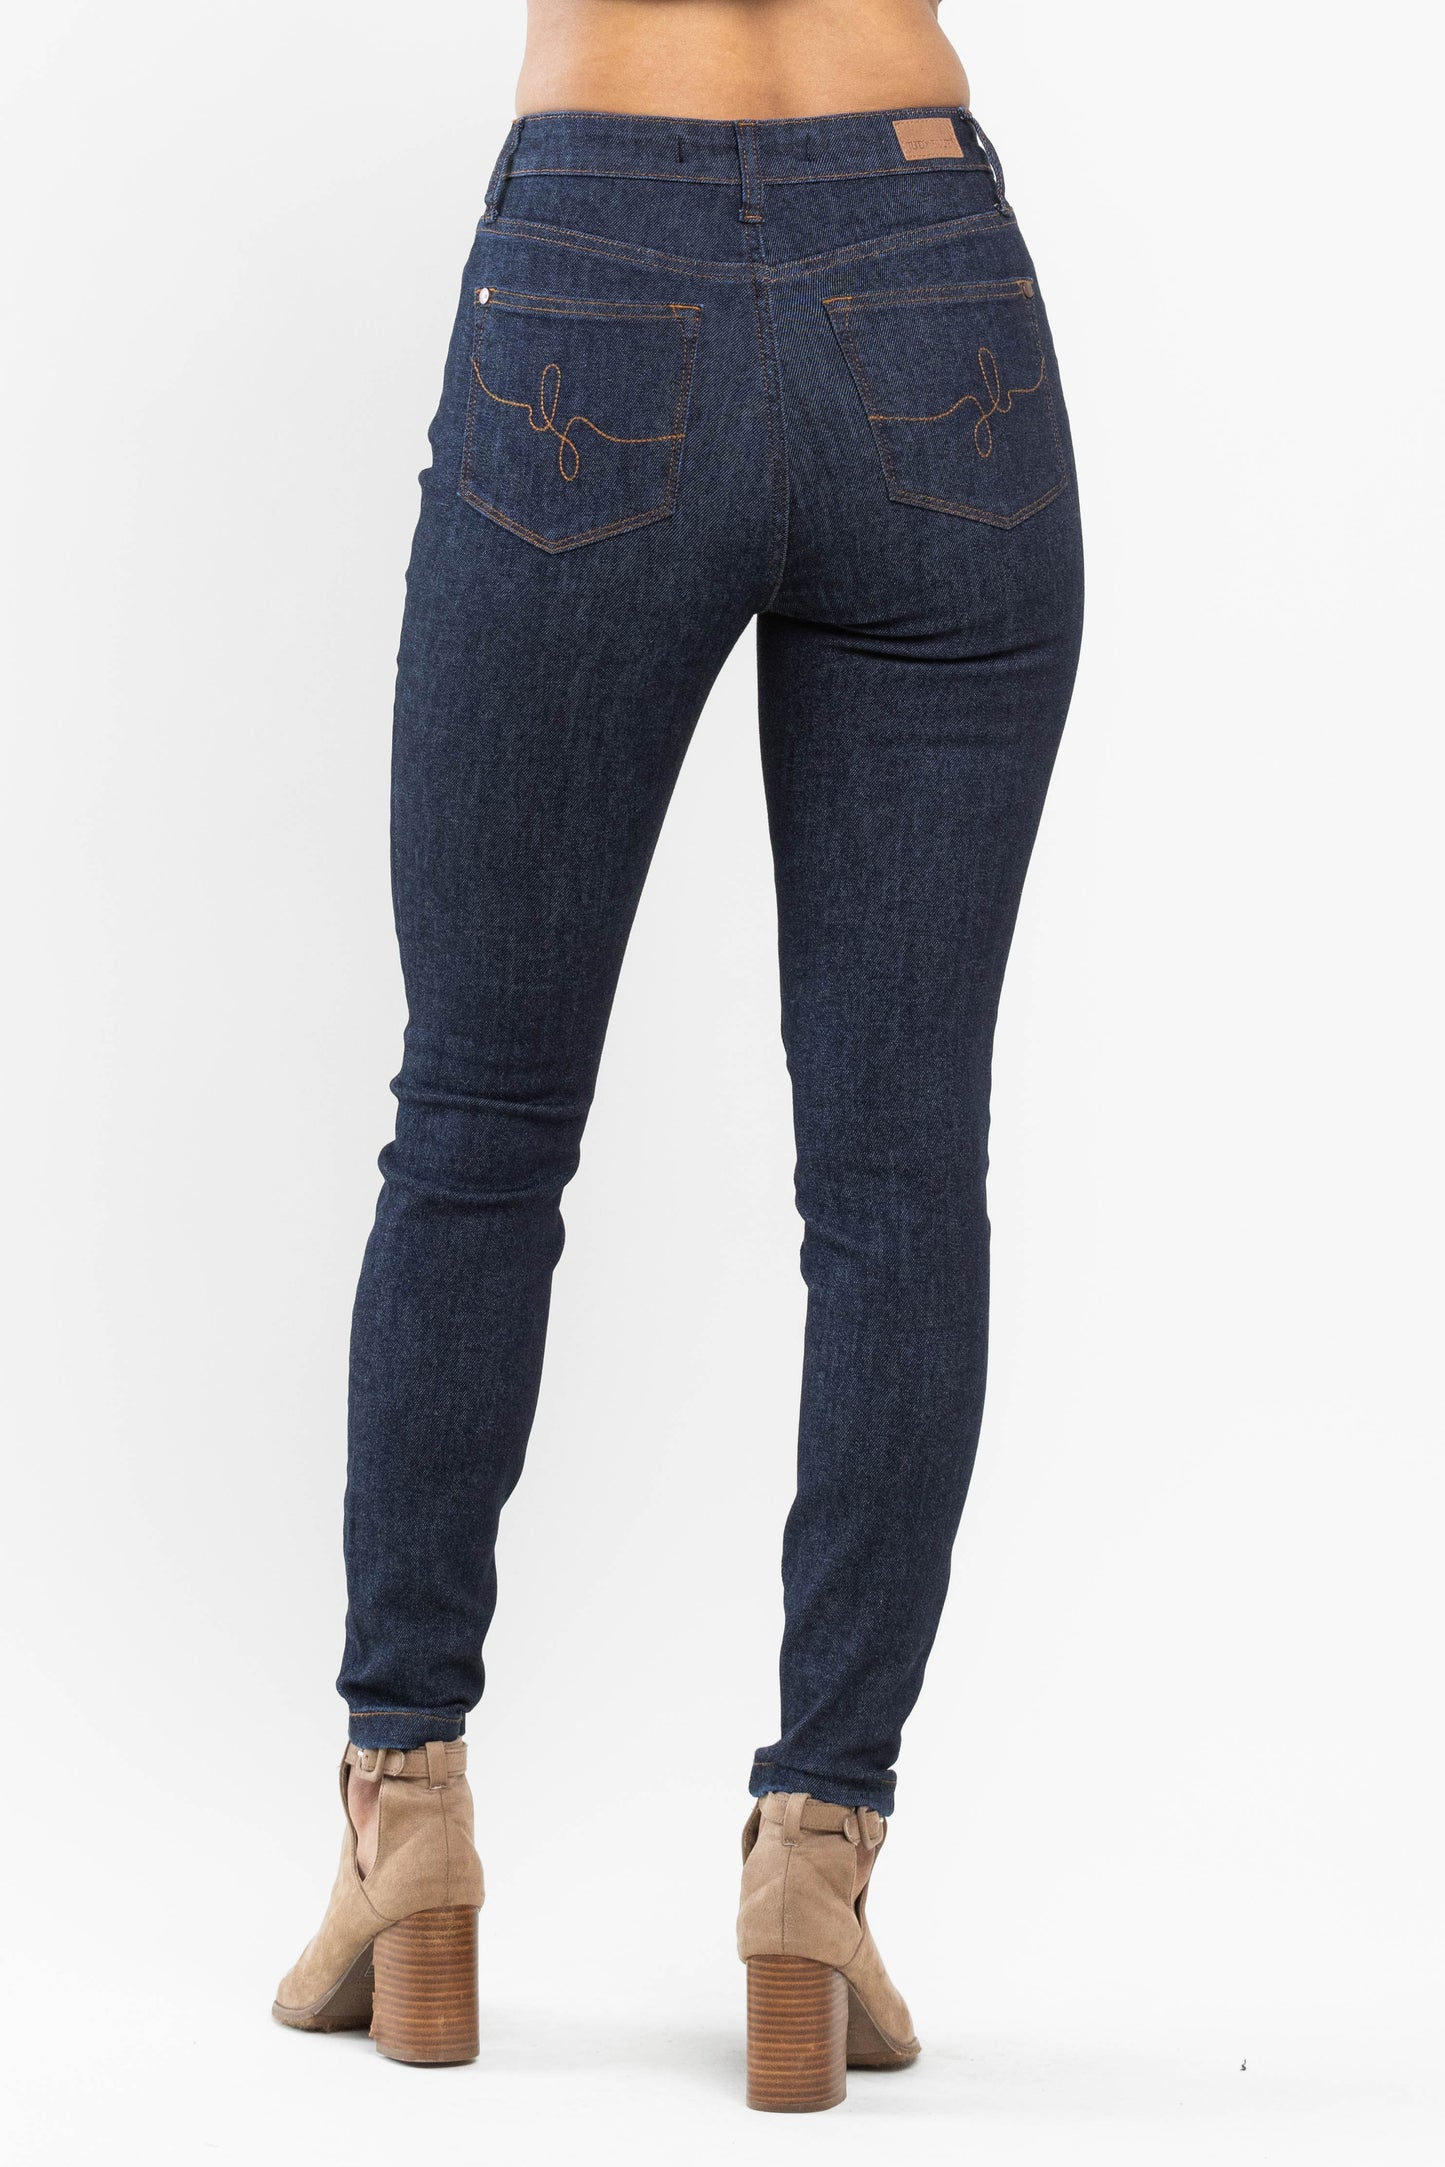 Hight Waist | Skinny | Back Pocket Embroidery Jeans